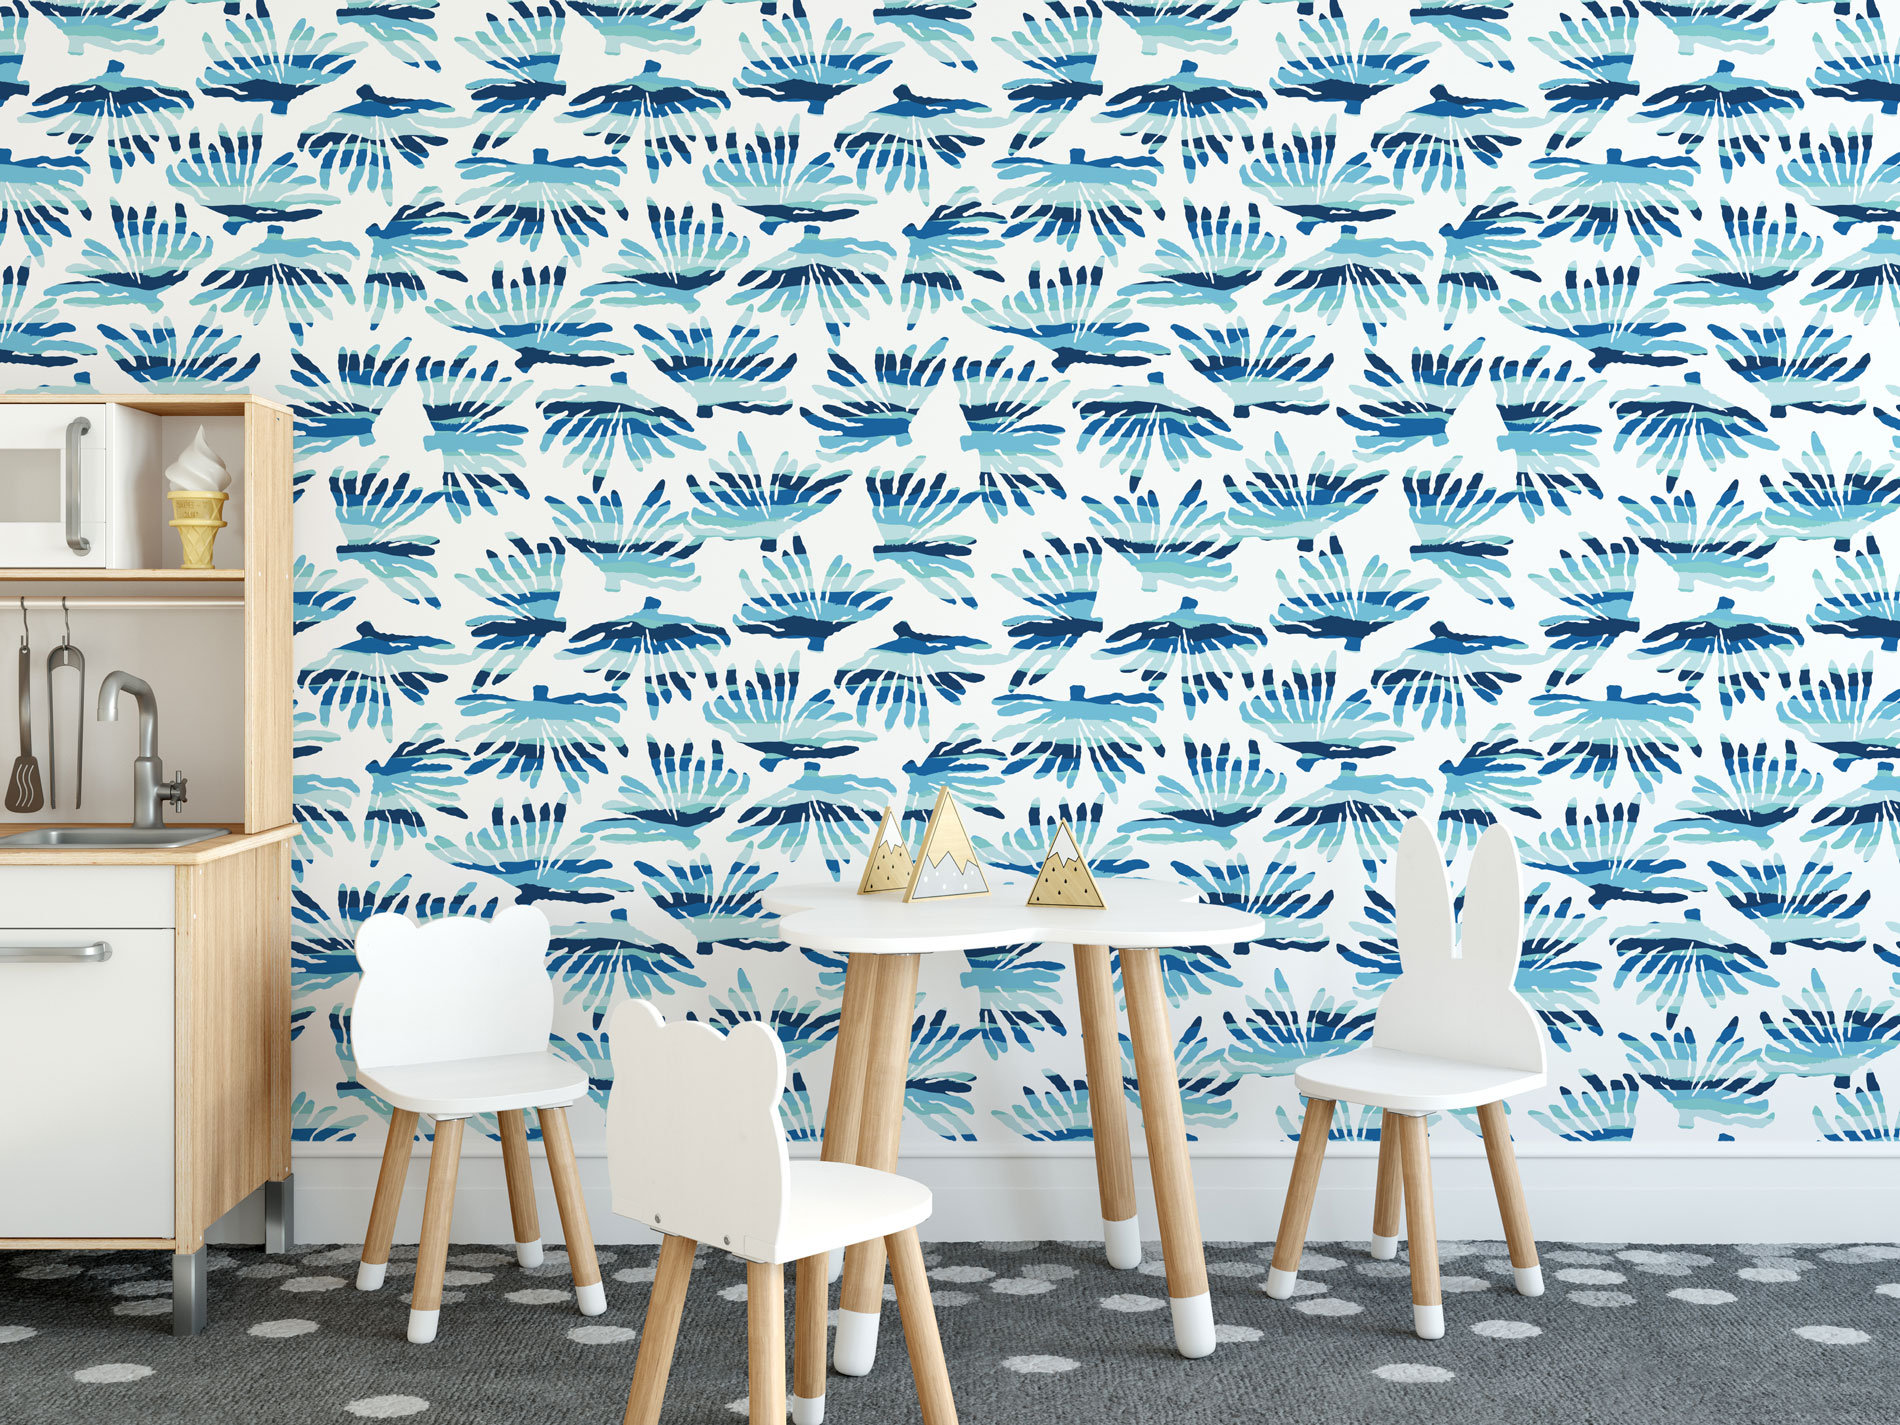 Peel  Stick Wallpaper 3ft x 2ft  Blue Heron Birds Shore Coastal Beach  Sand Seashell Custom Removable Wallpaper by Spoonflower  Walmartcom